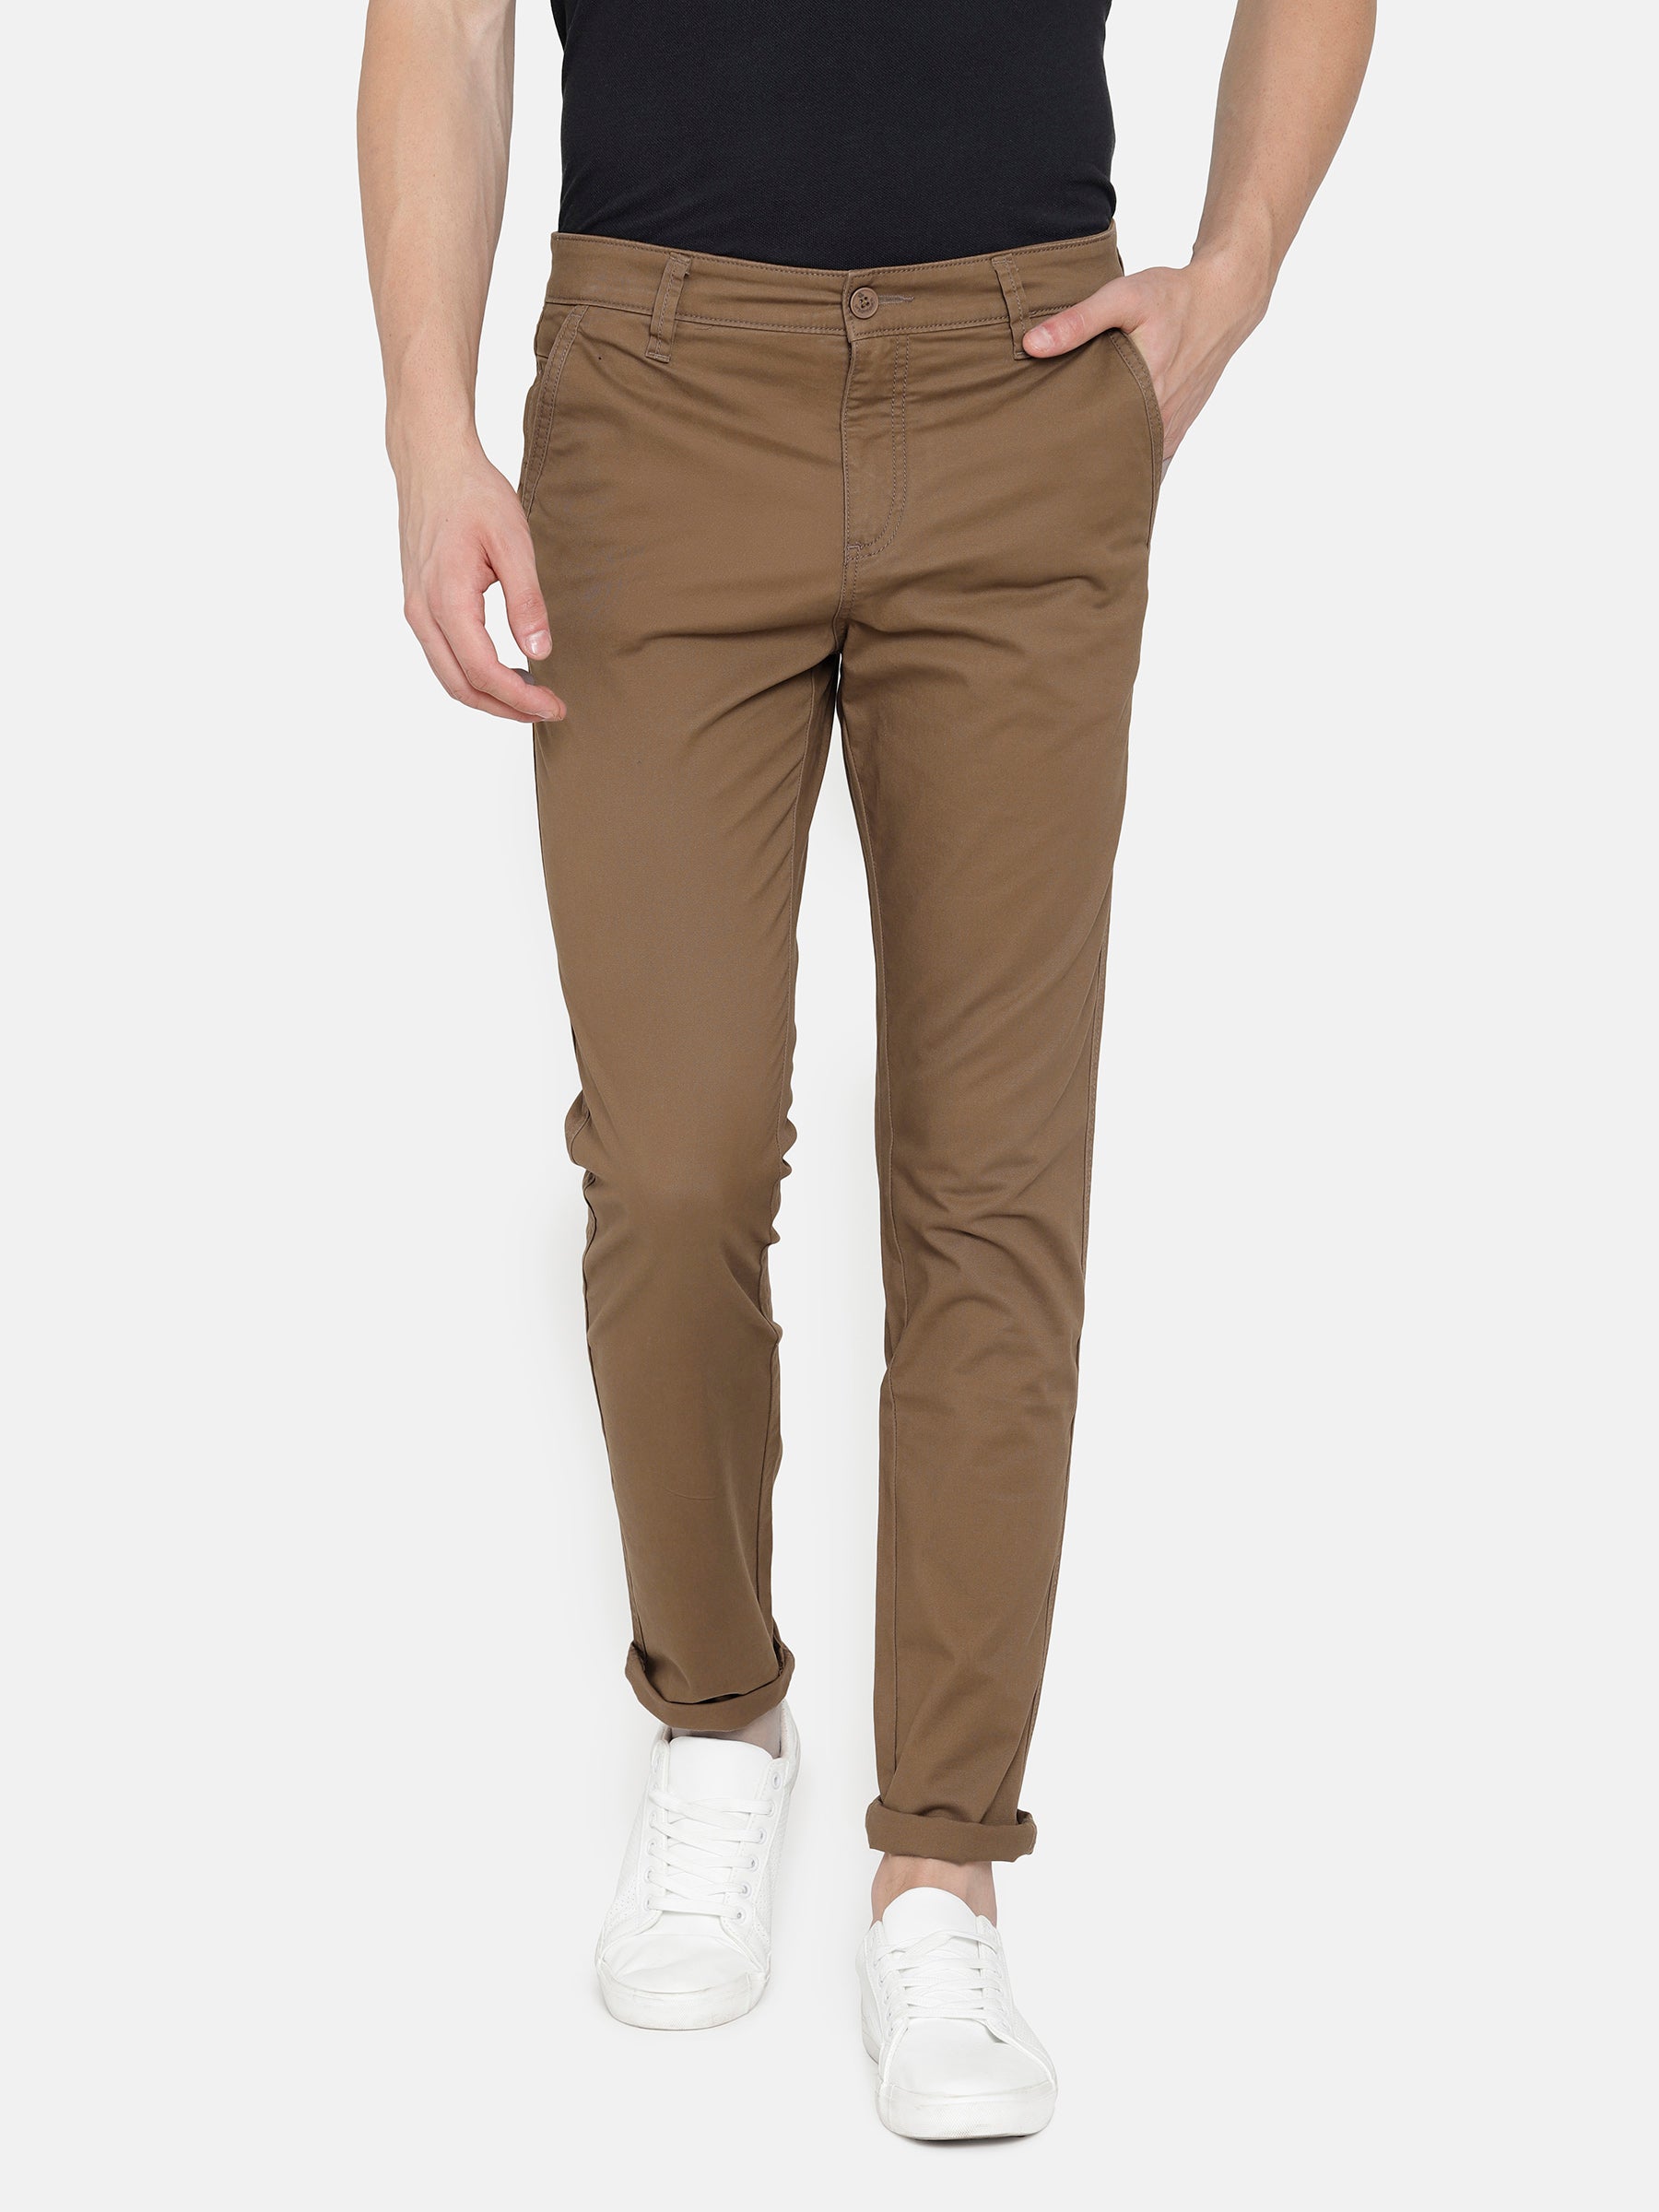 Light Brown Pants - Straight Leg Pants - High-Rise Trouser Pants - Lulus